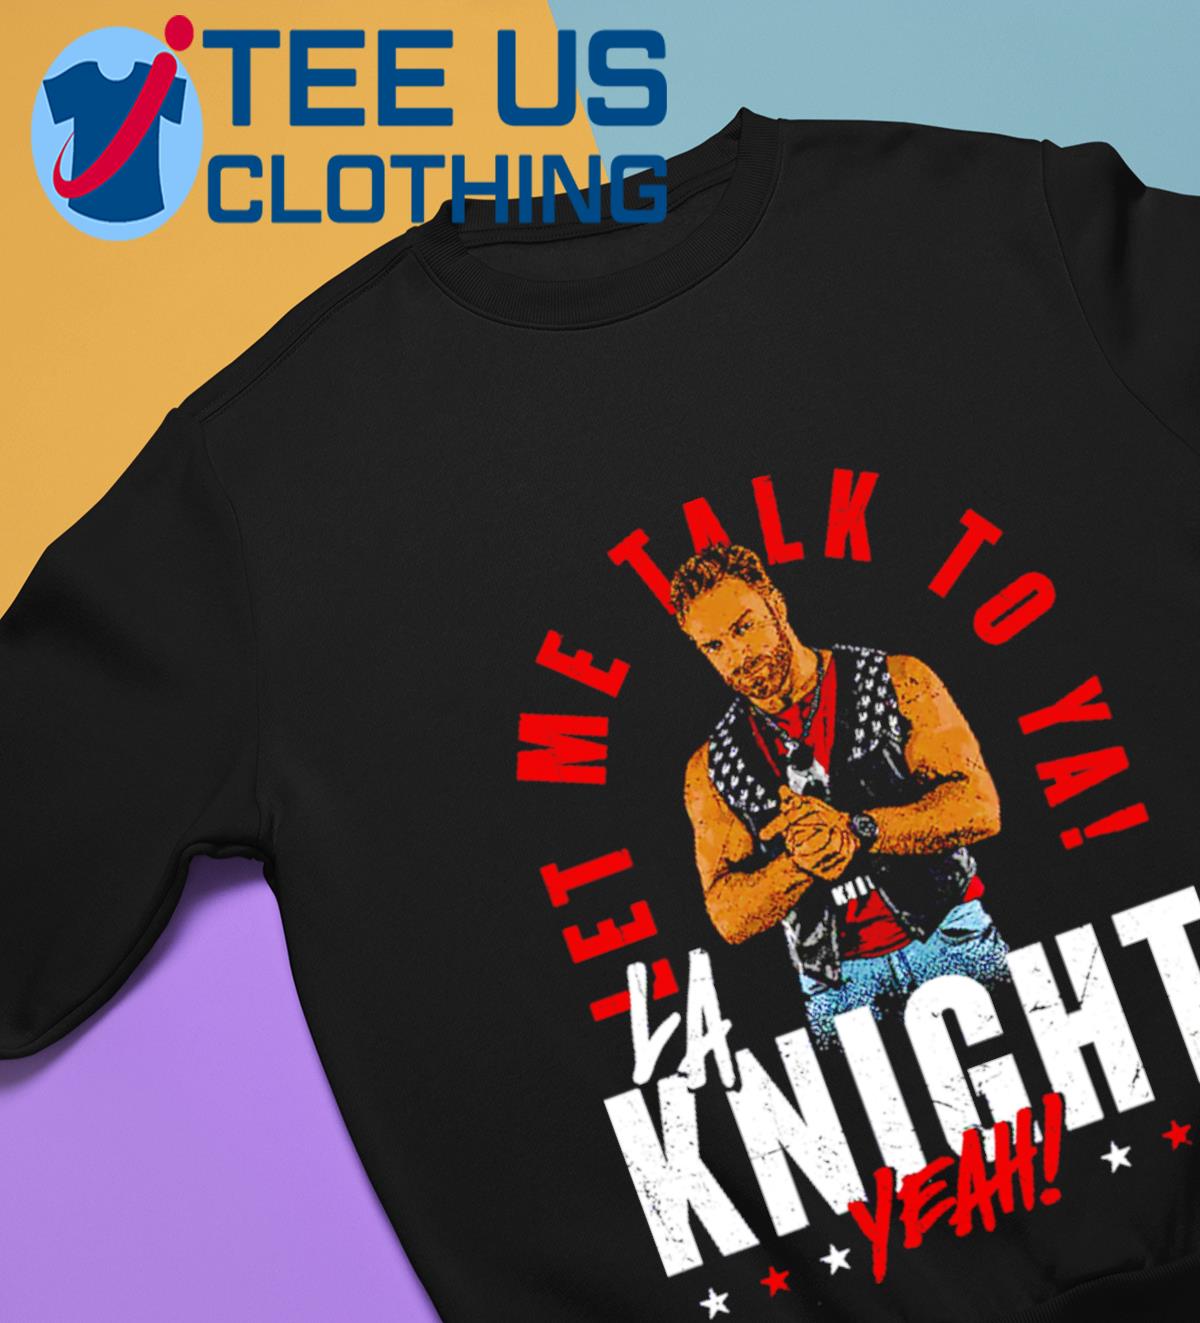 Let Me Talk To Ya! LA Knight has a NEW T-Shirt at #WWEShop! Get